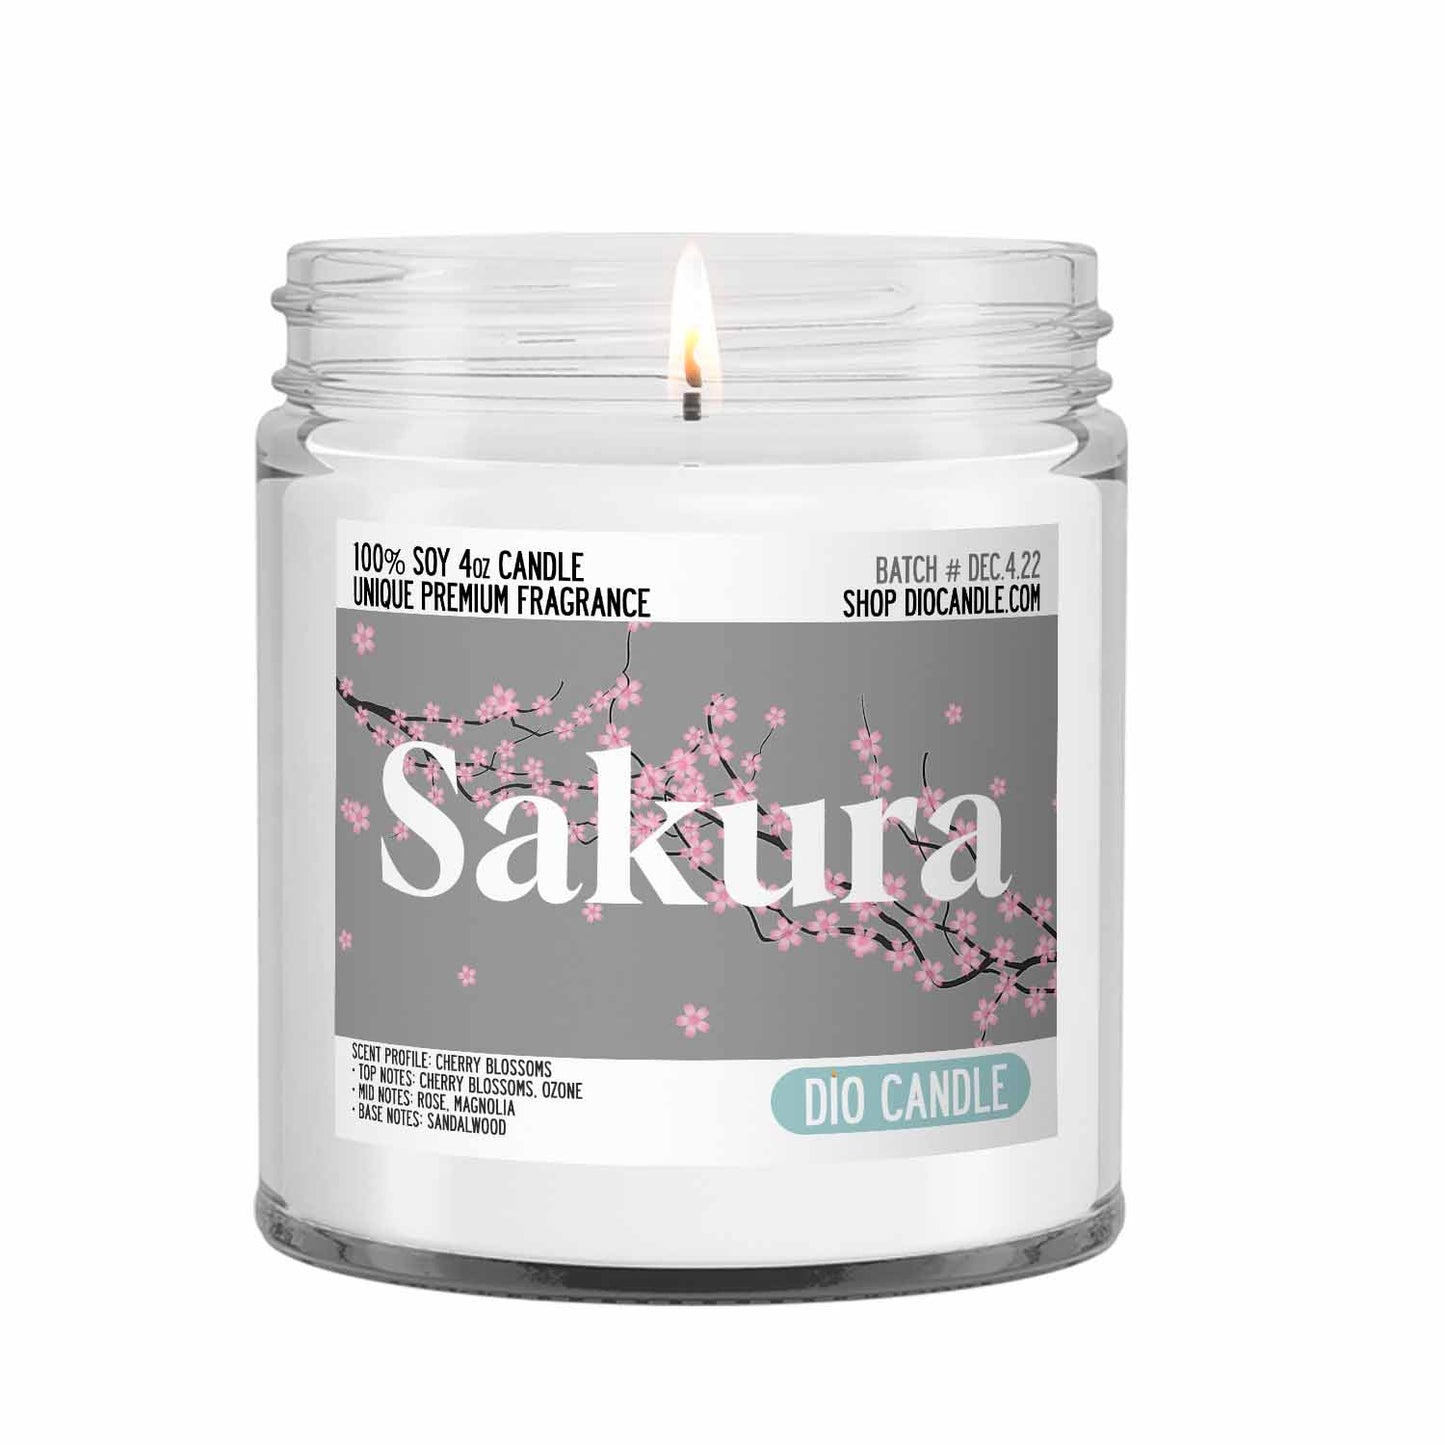 Sakura Candle